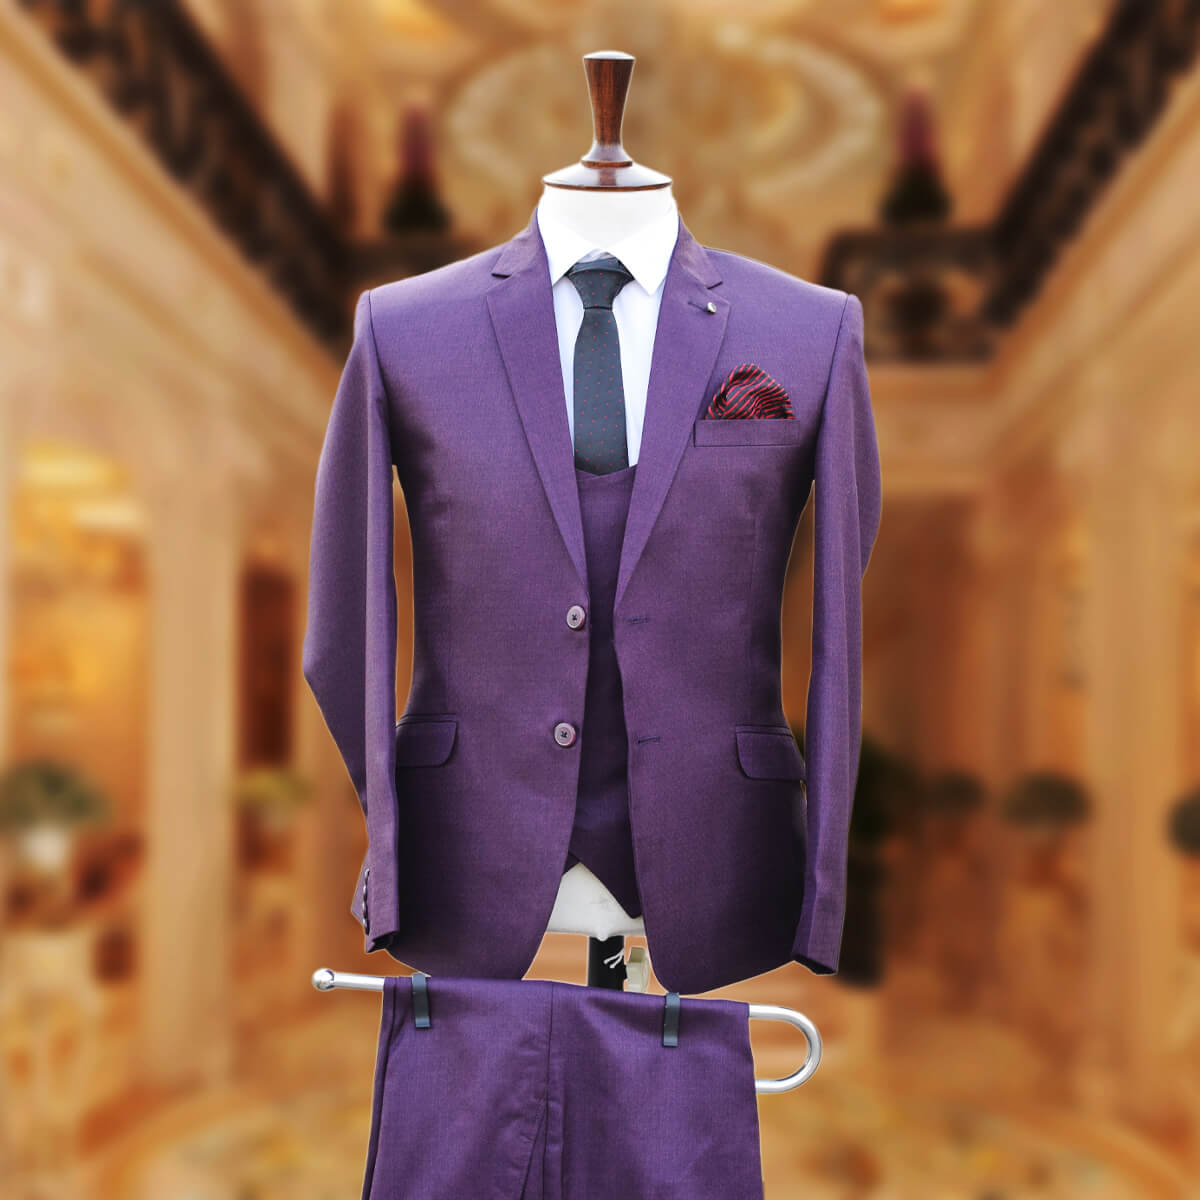 Morans Menswear - New purple 3 piece check suit €249 | Facebook